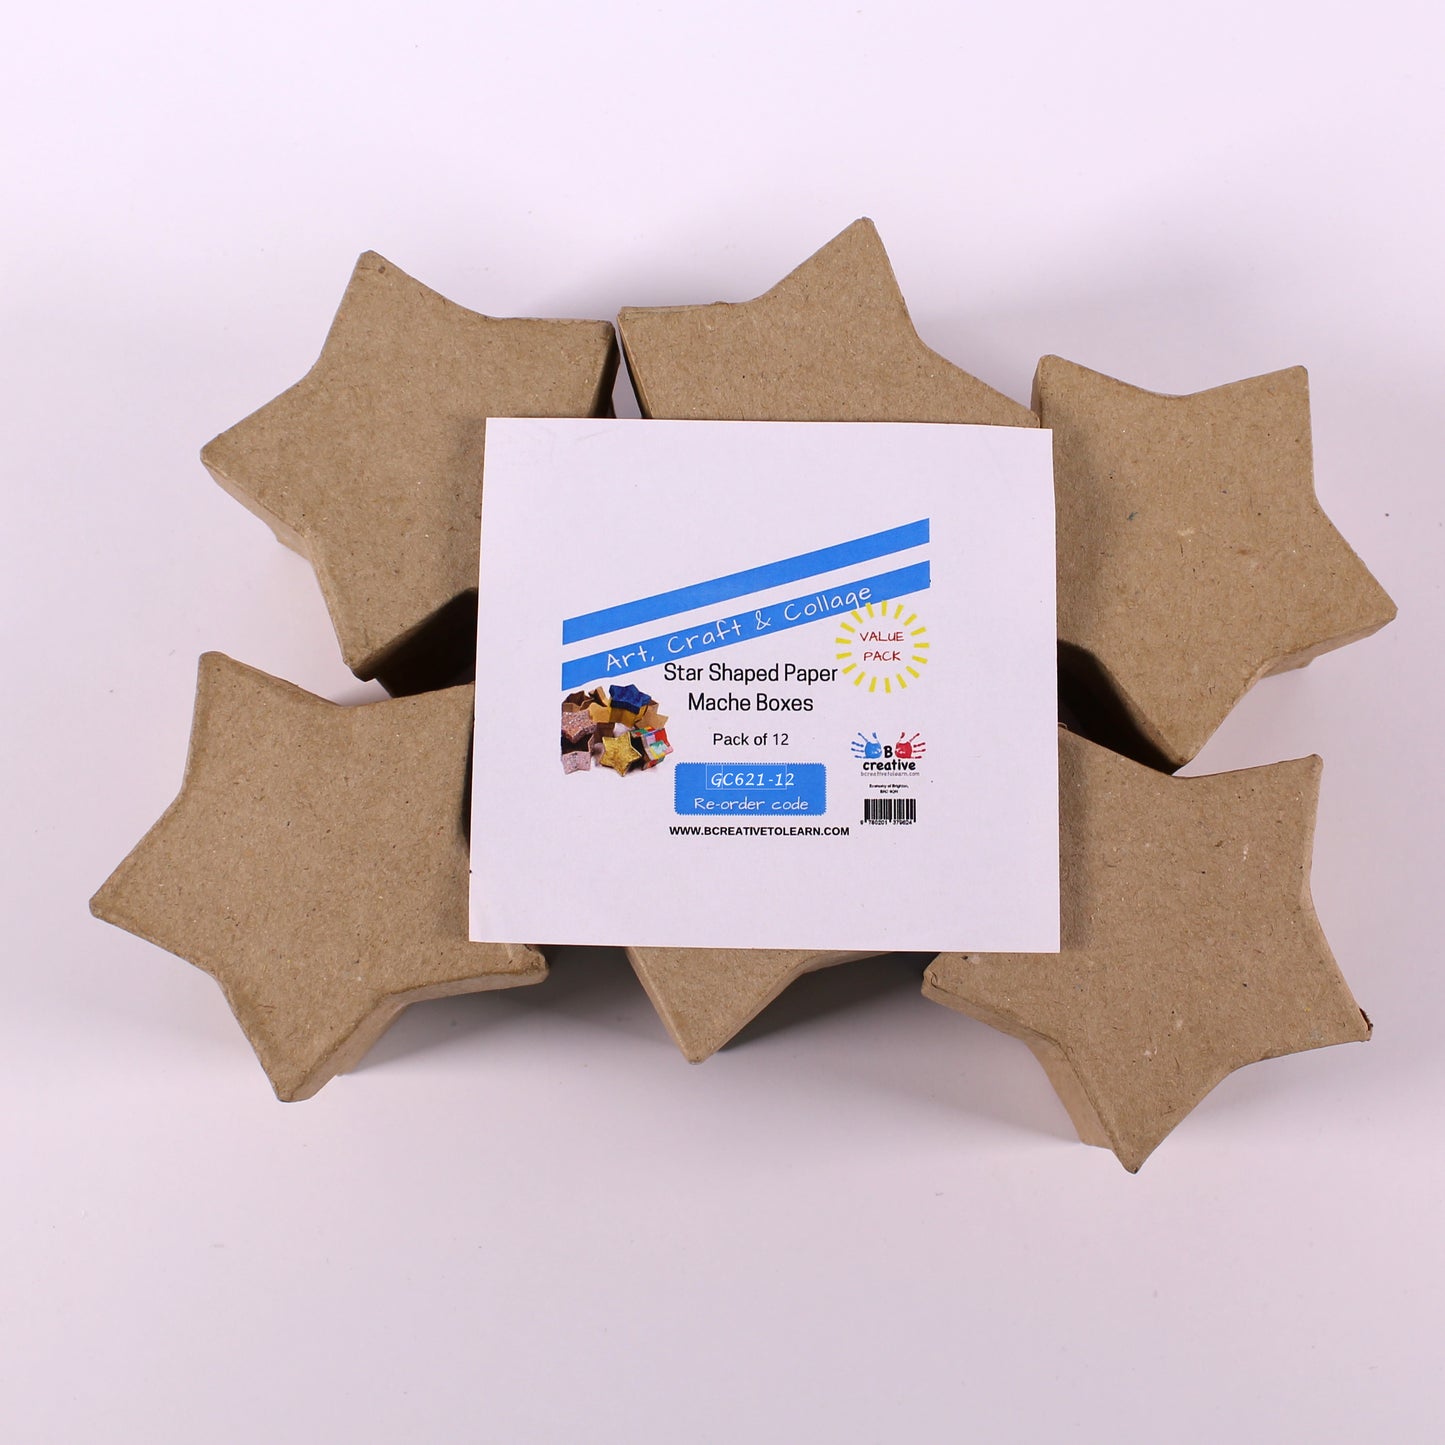 Papier Mache Star Shaped Boxes with Lids